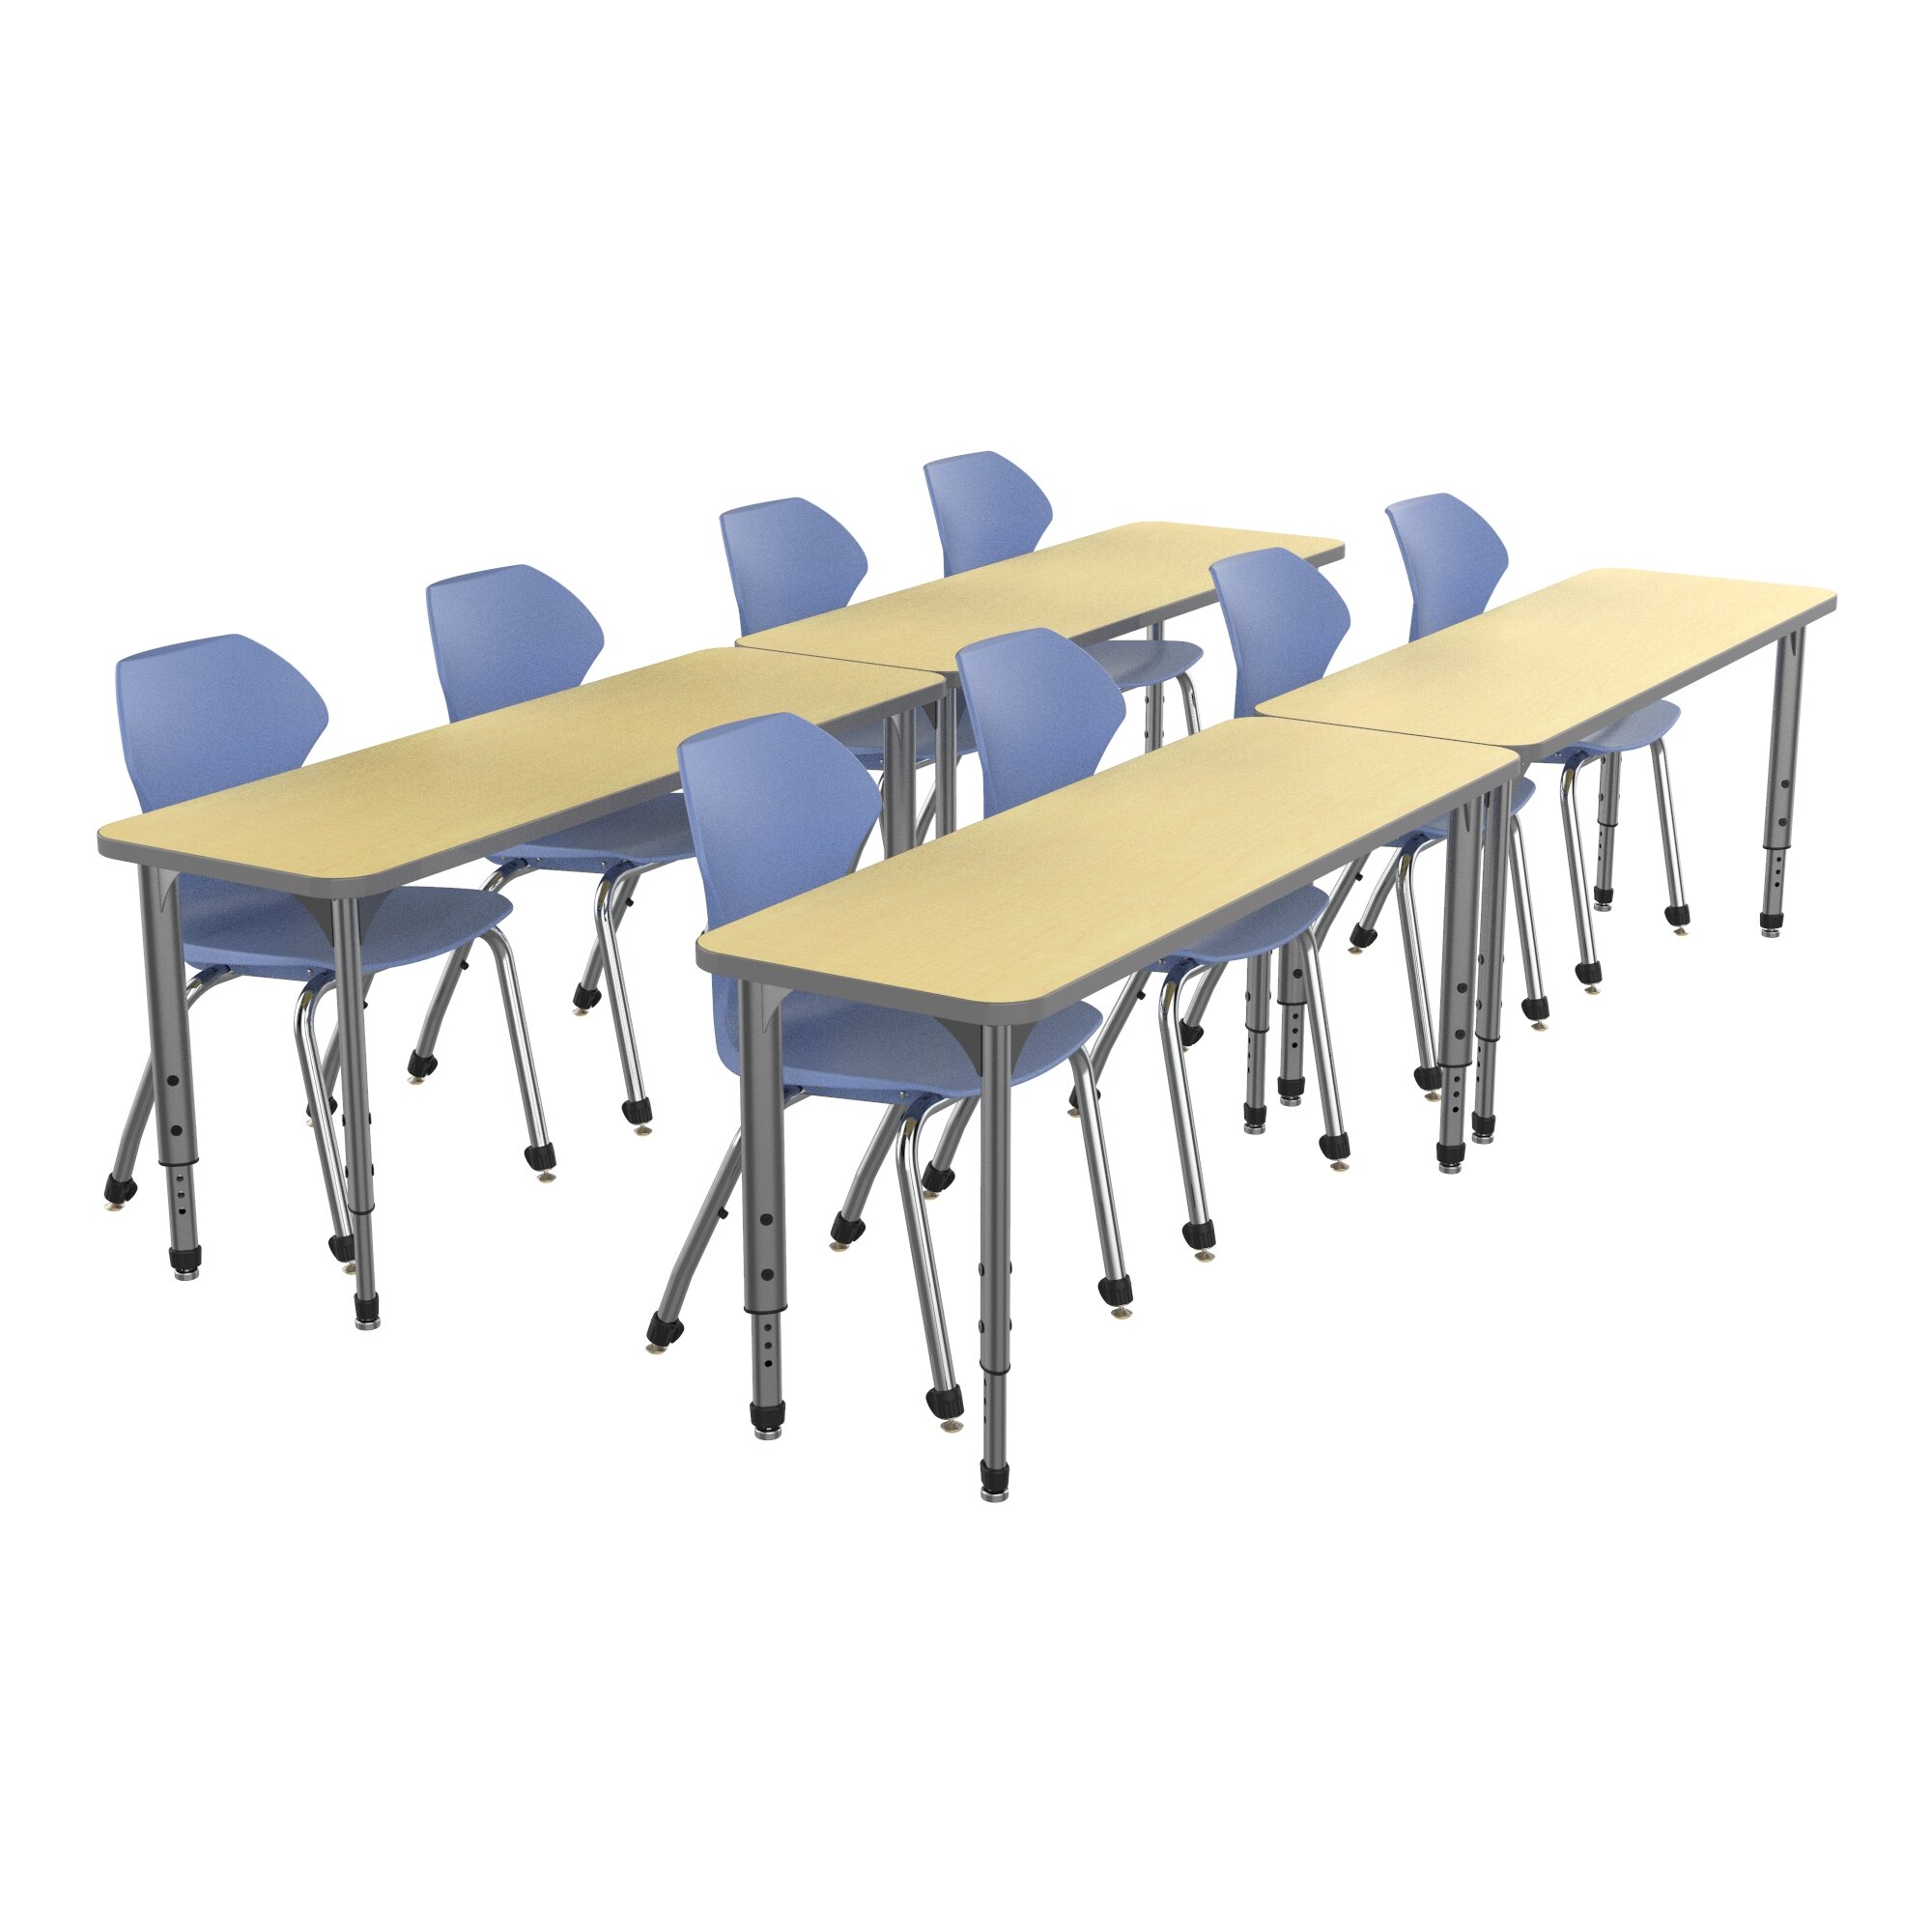 Marco Group Classroom Set 4 Multi Student Desks 8 Chairs Wayfair